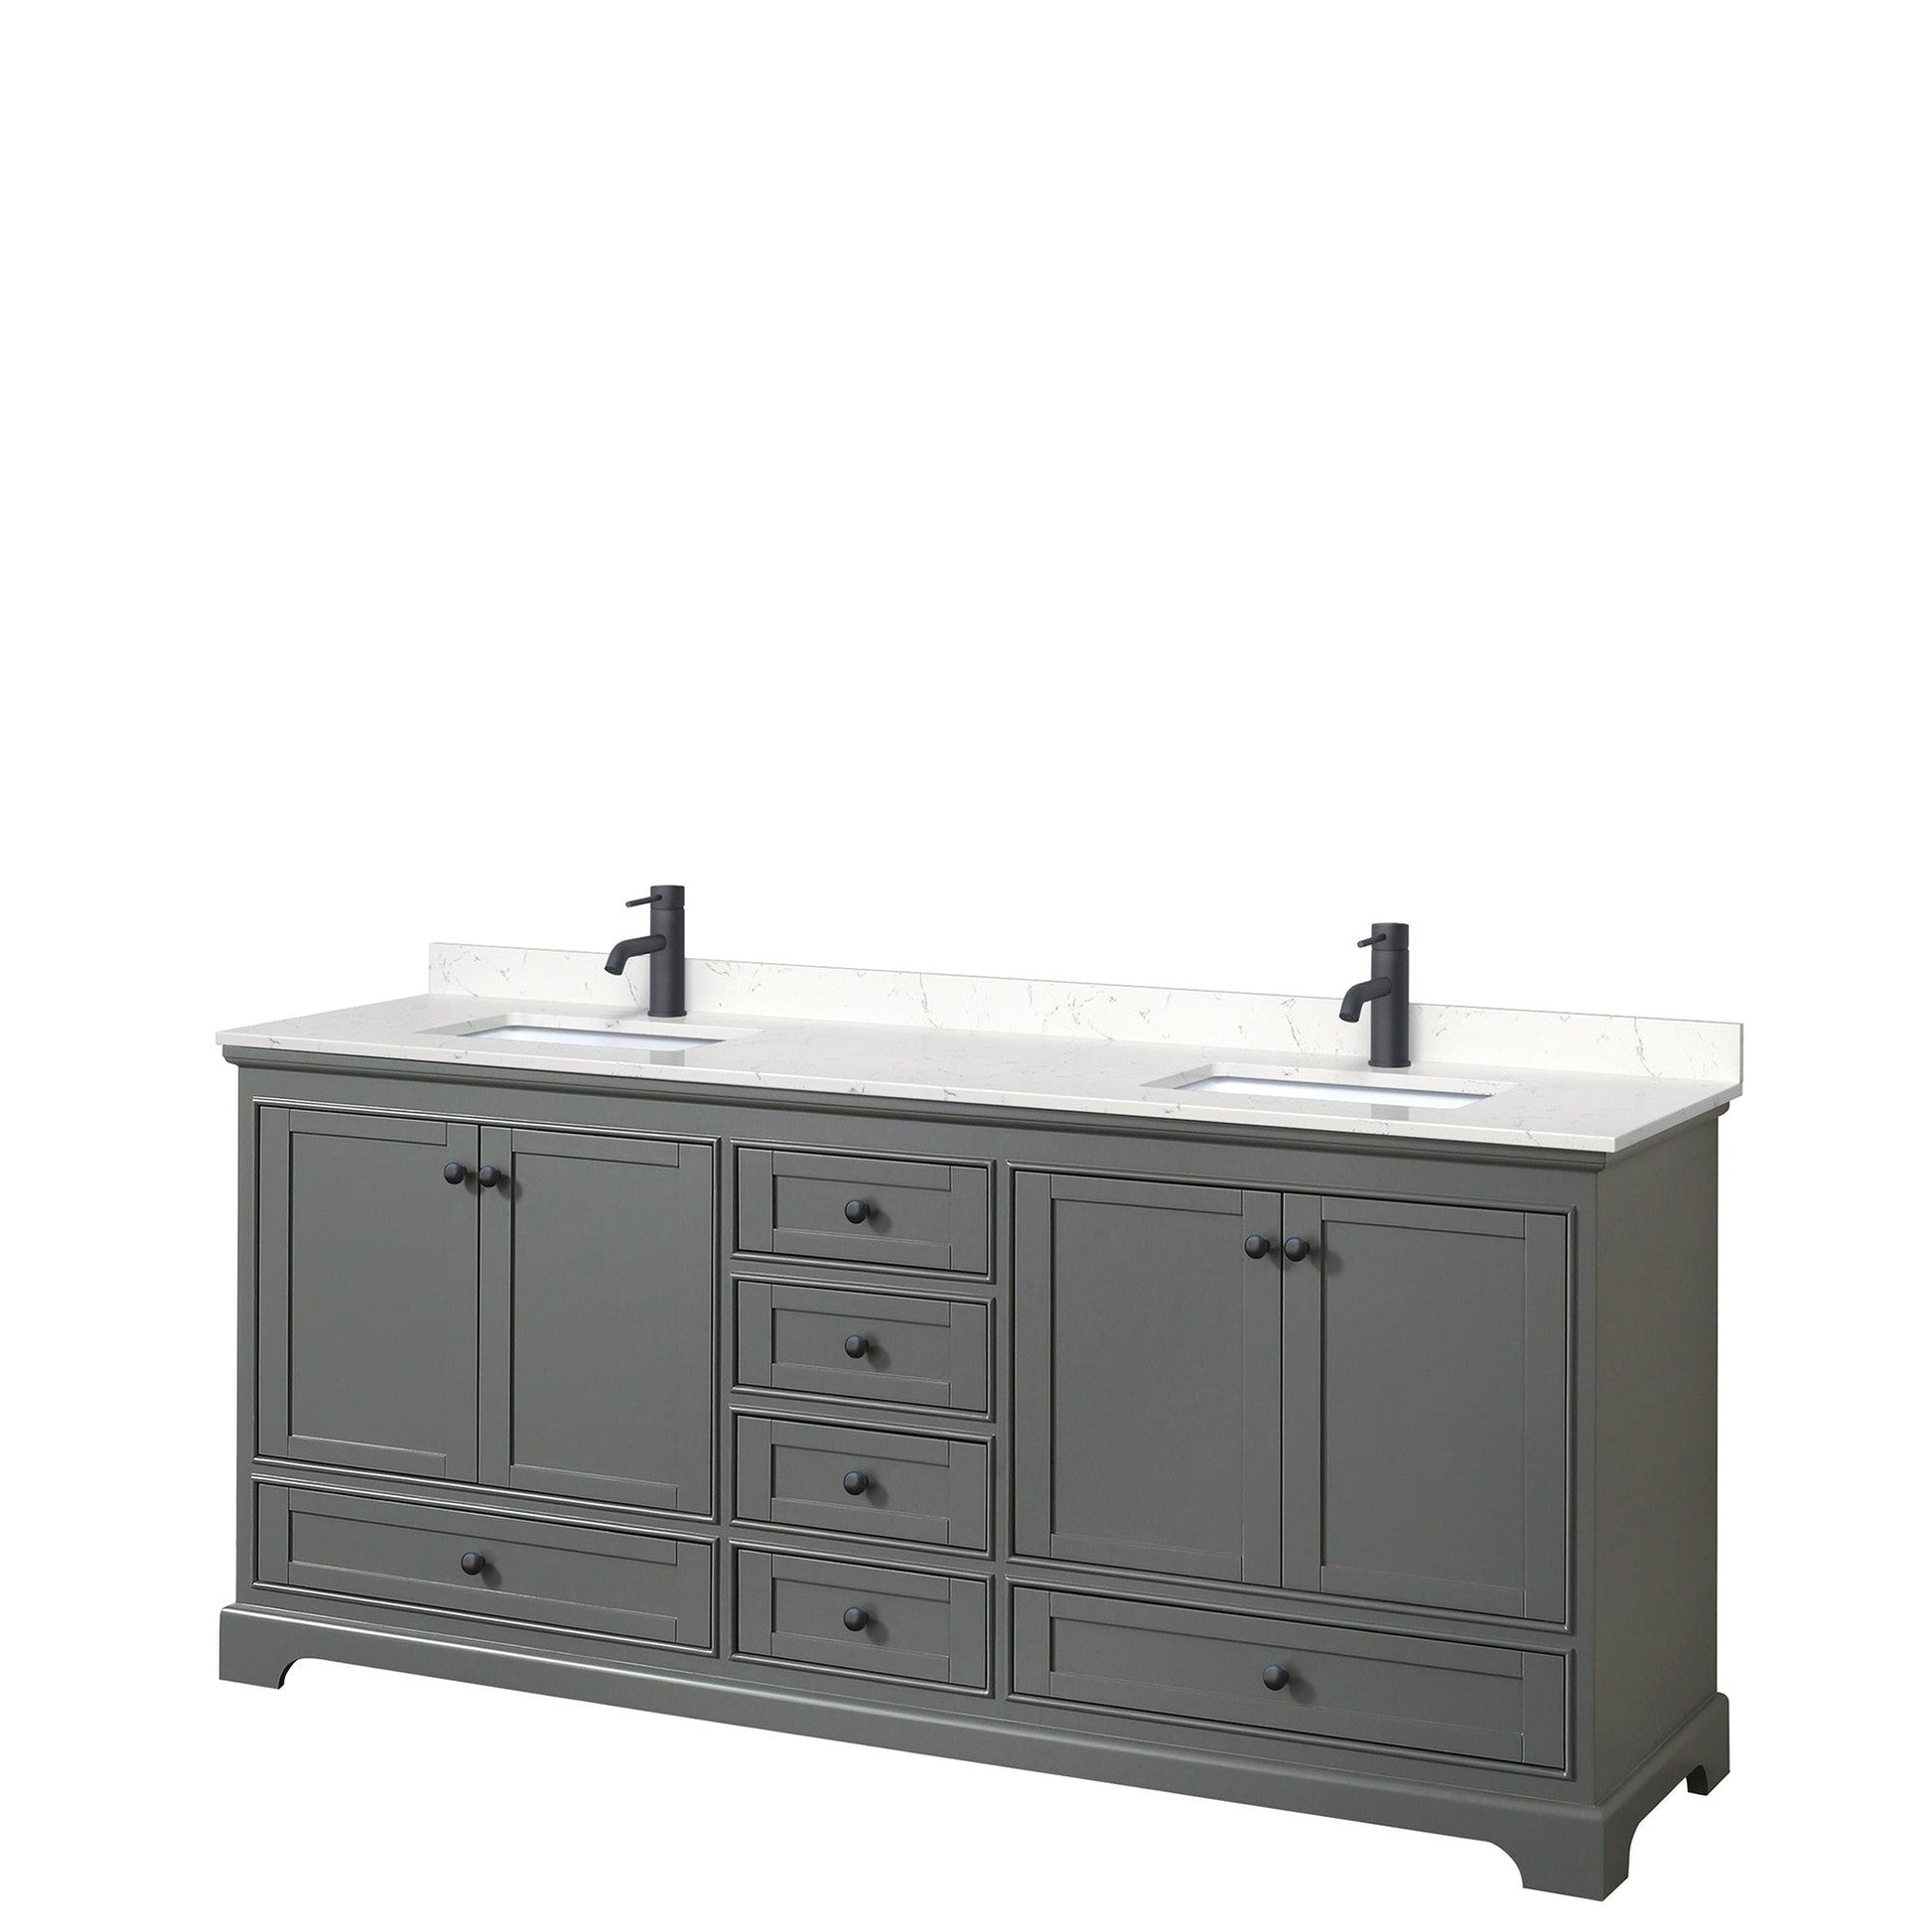 Deborah 80" Double Bathroom Vanity in Dark Gray, Carrara Cultured Marble Countertop, Undermount Square Sinks, Matte Black Trim